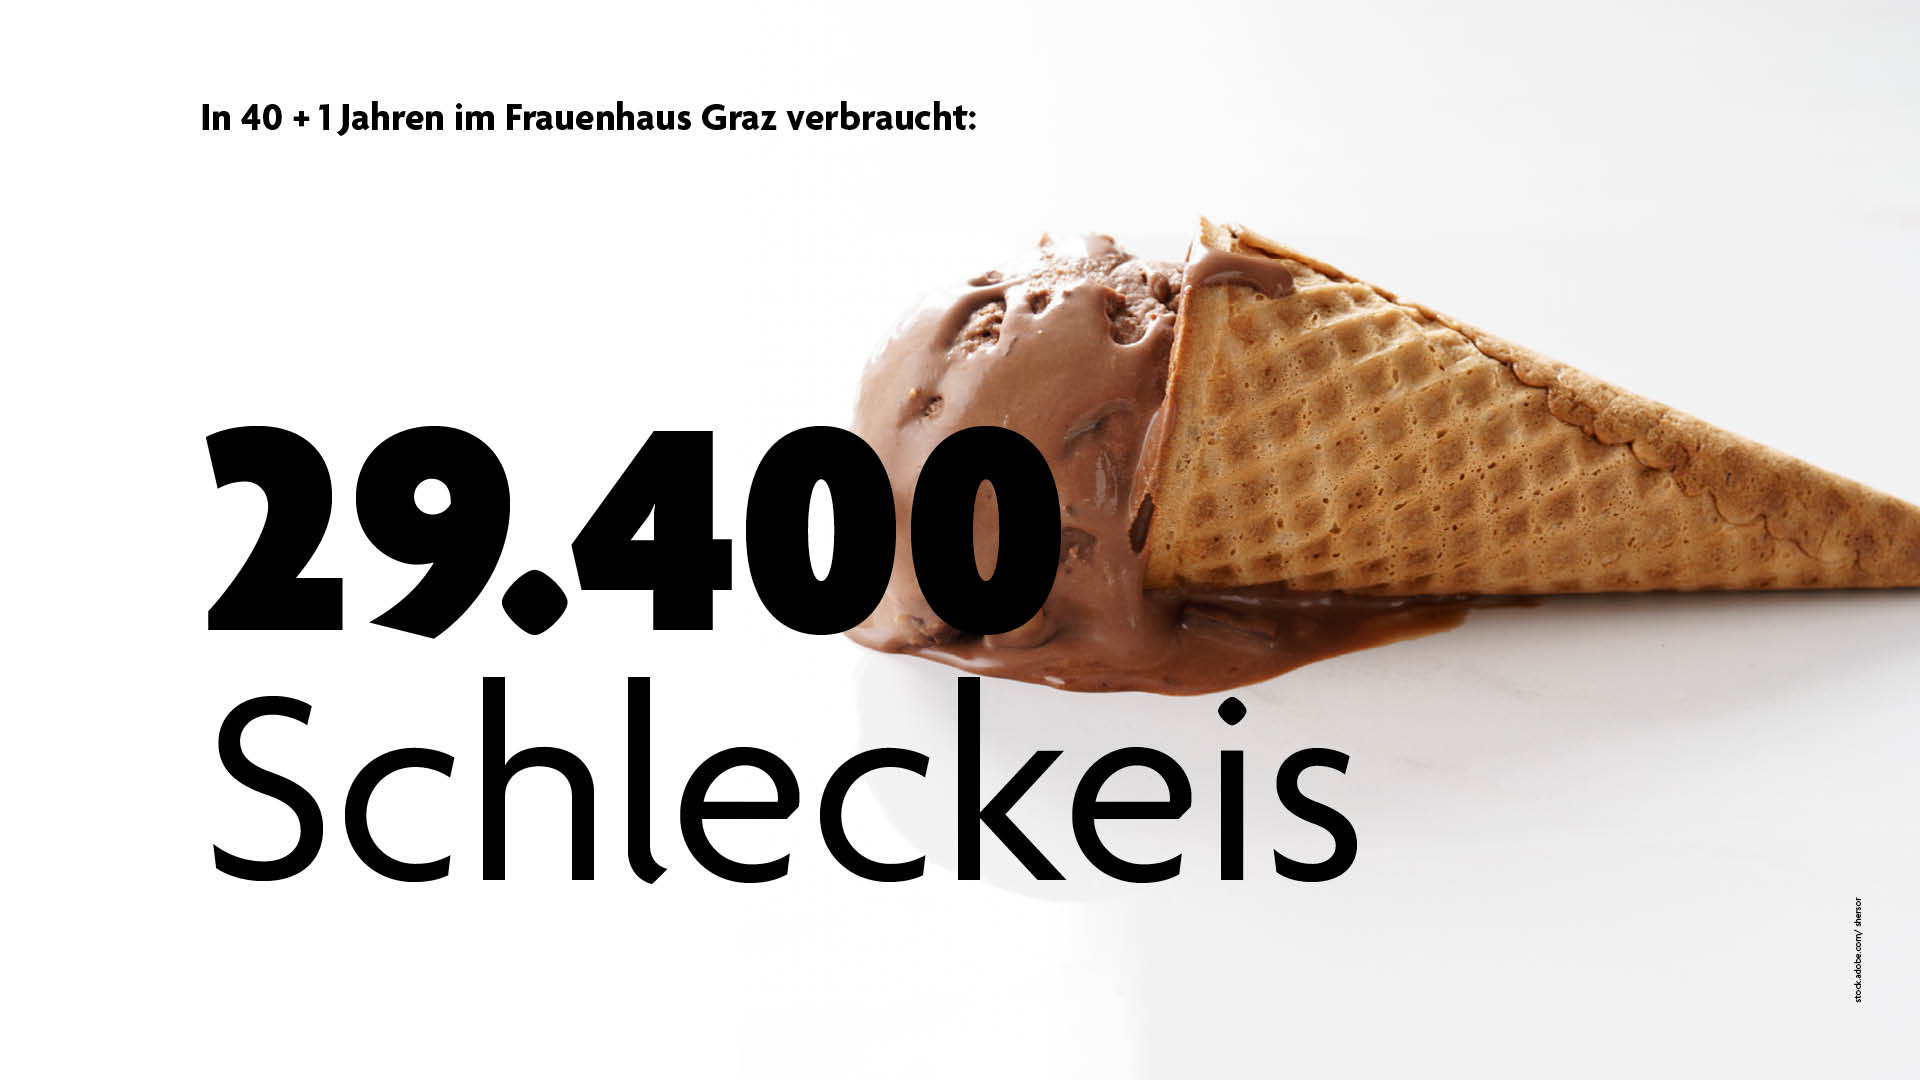 LOOK_Frauenhaeuser_web_Schleckeis_c_Adobe Stock